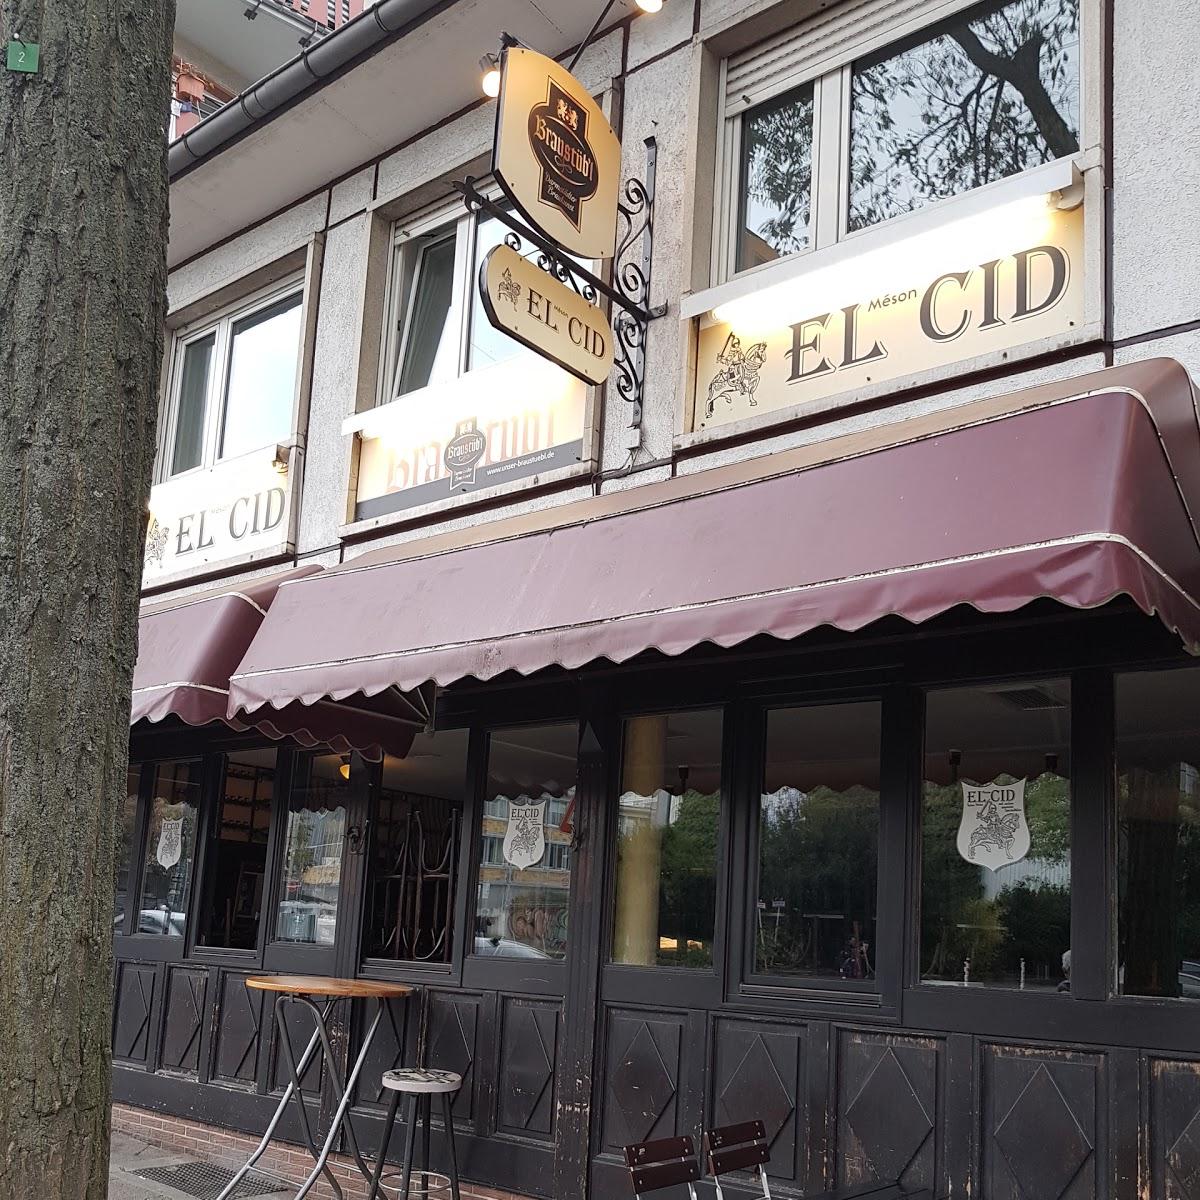 Restaurant "El Cid" in Darmstadt